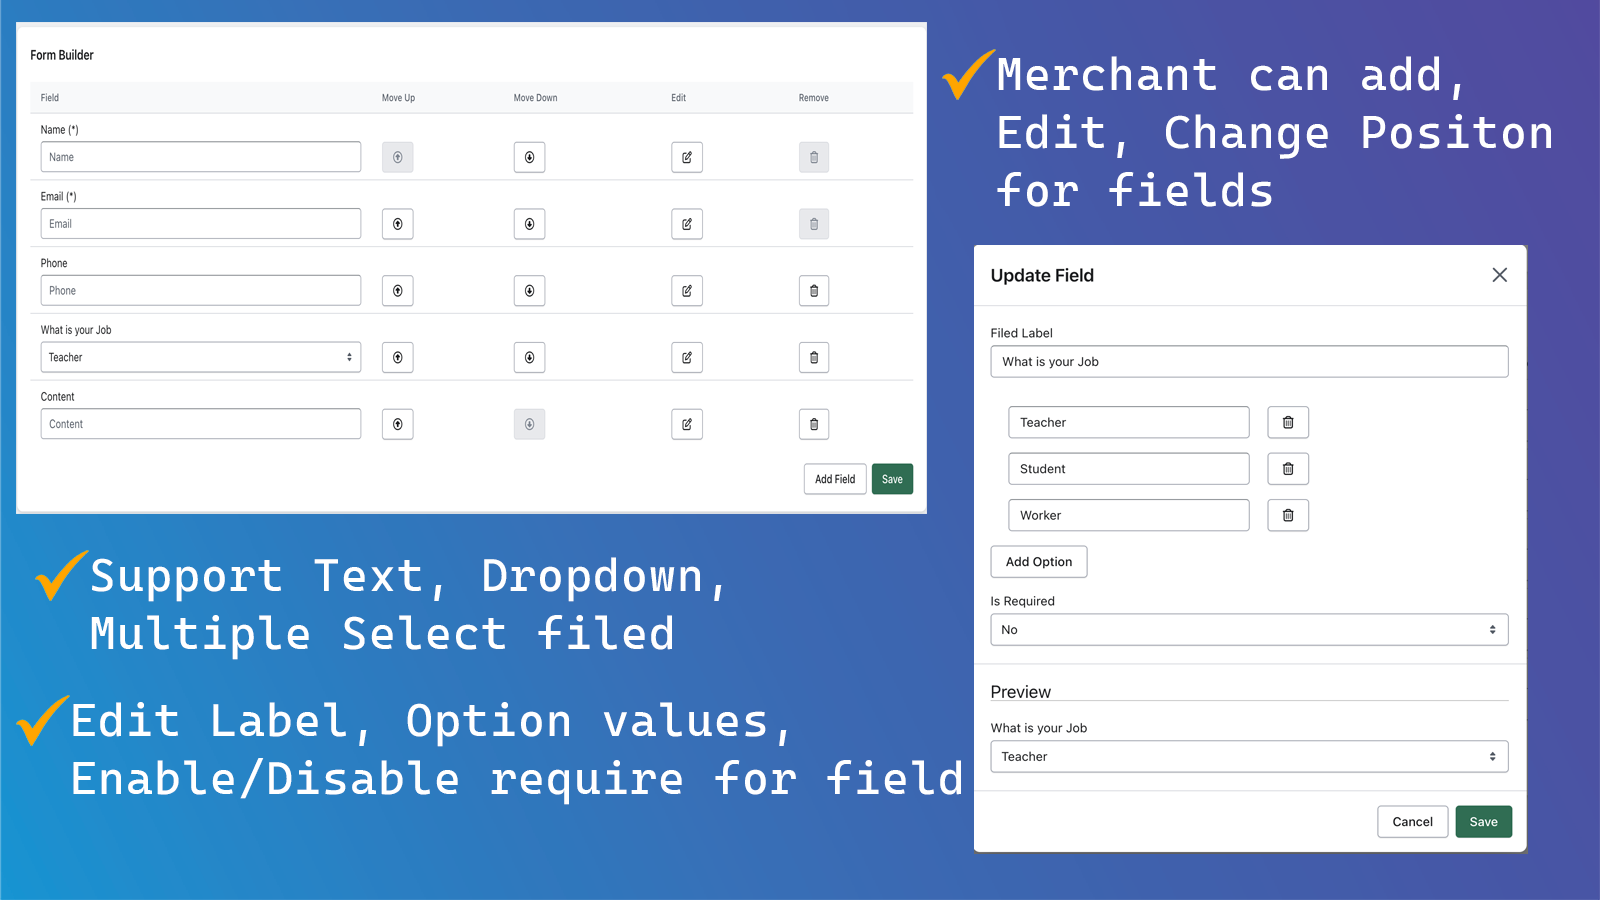 Form Builder help Merchant can add/edit extra fields